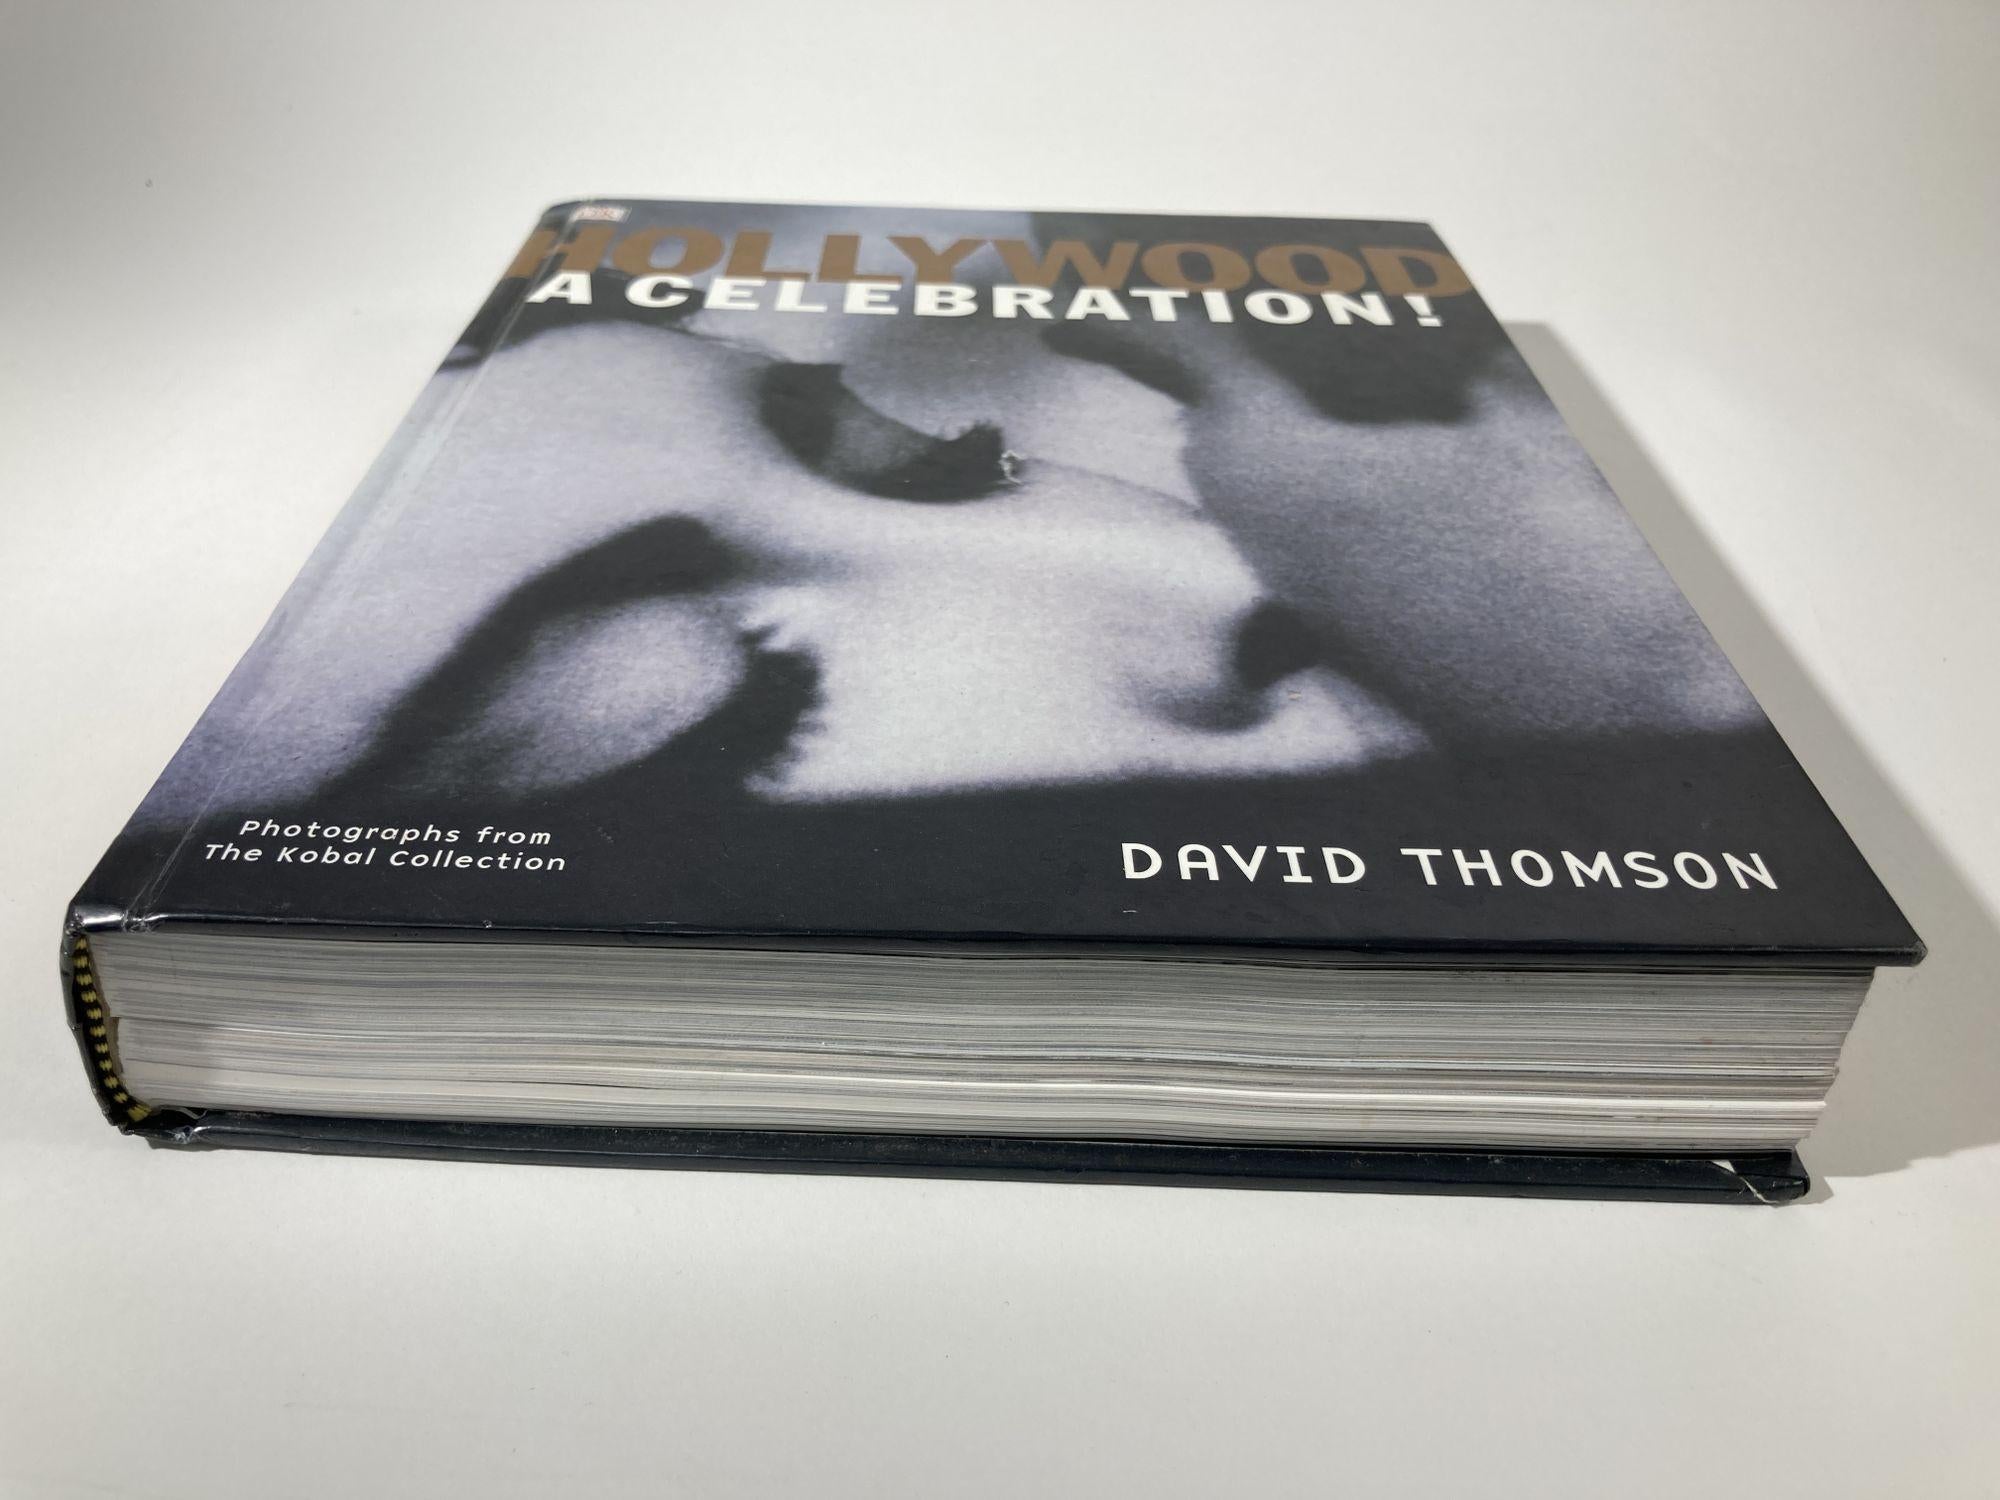 Hollywood: Un Libro de Celebración de David Thomson Estadounidense en venta